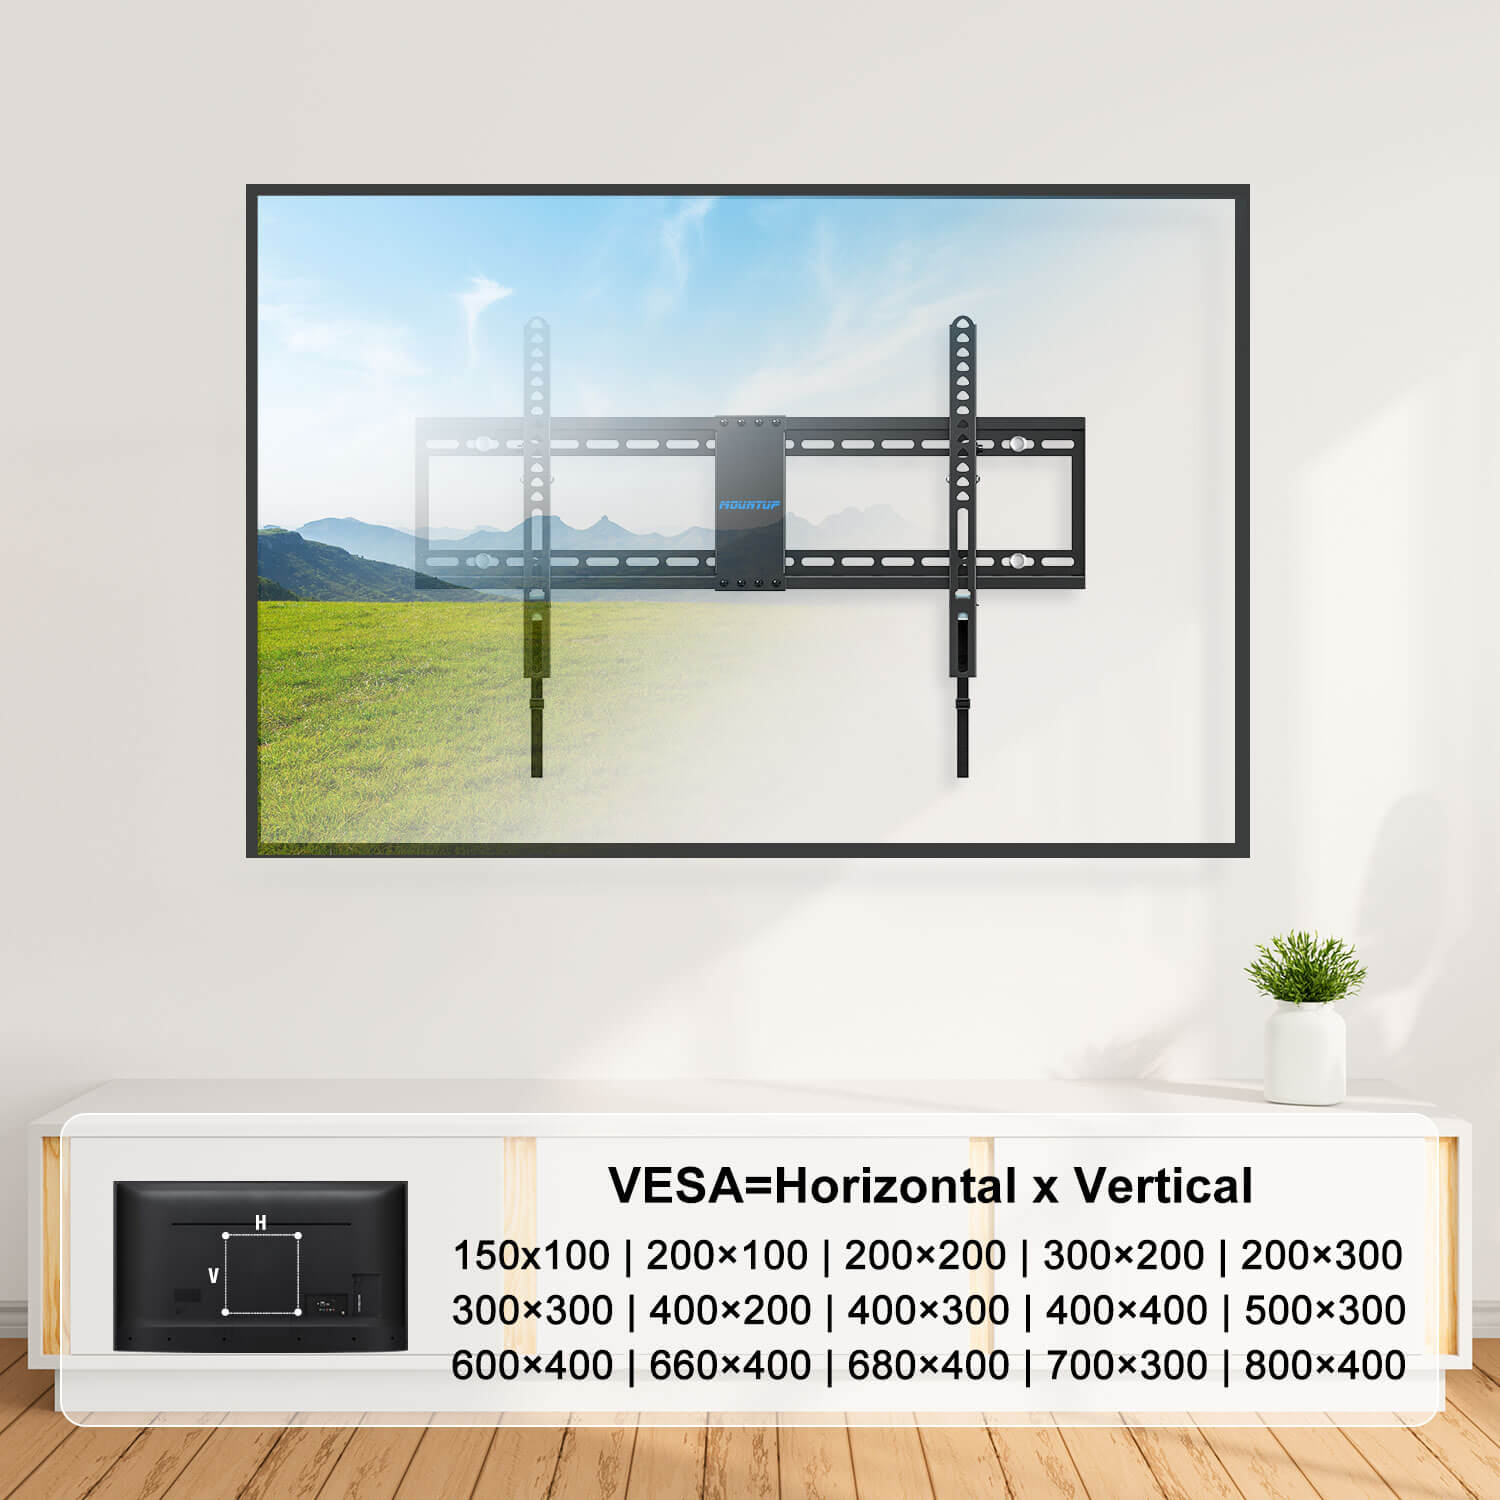 Neigbare TV-Wandhalterung für 42-Zoll-86-Zoll-Fernseher MP0008-XLK